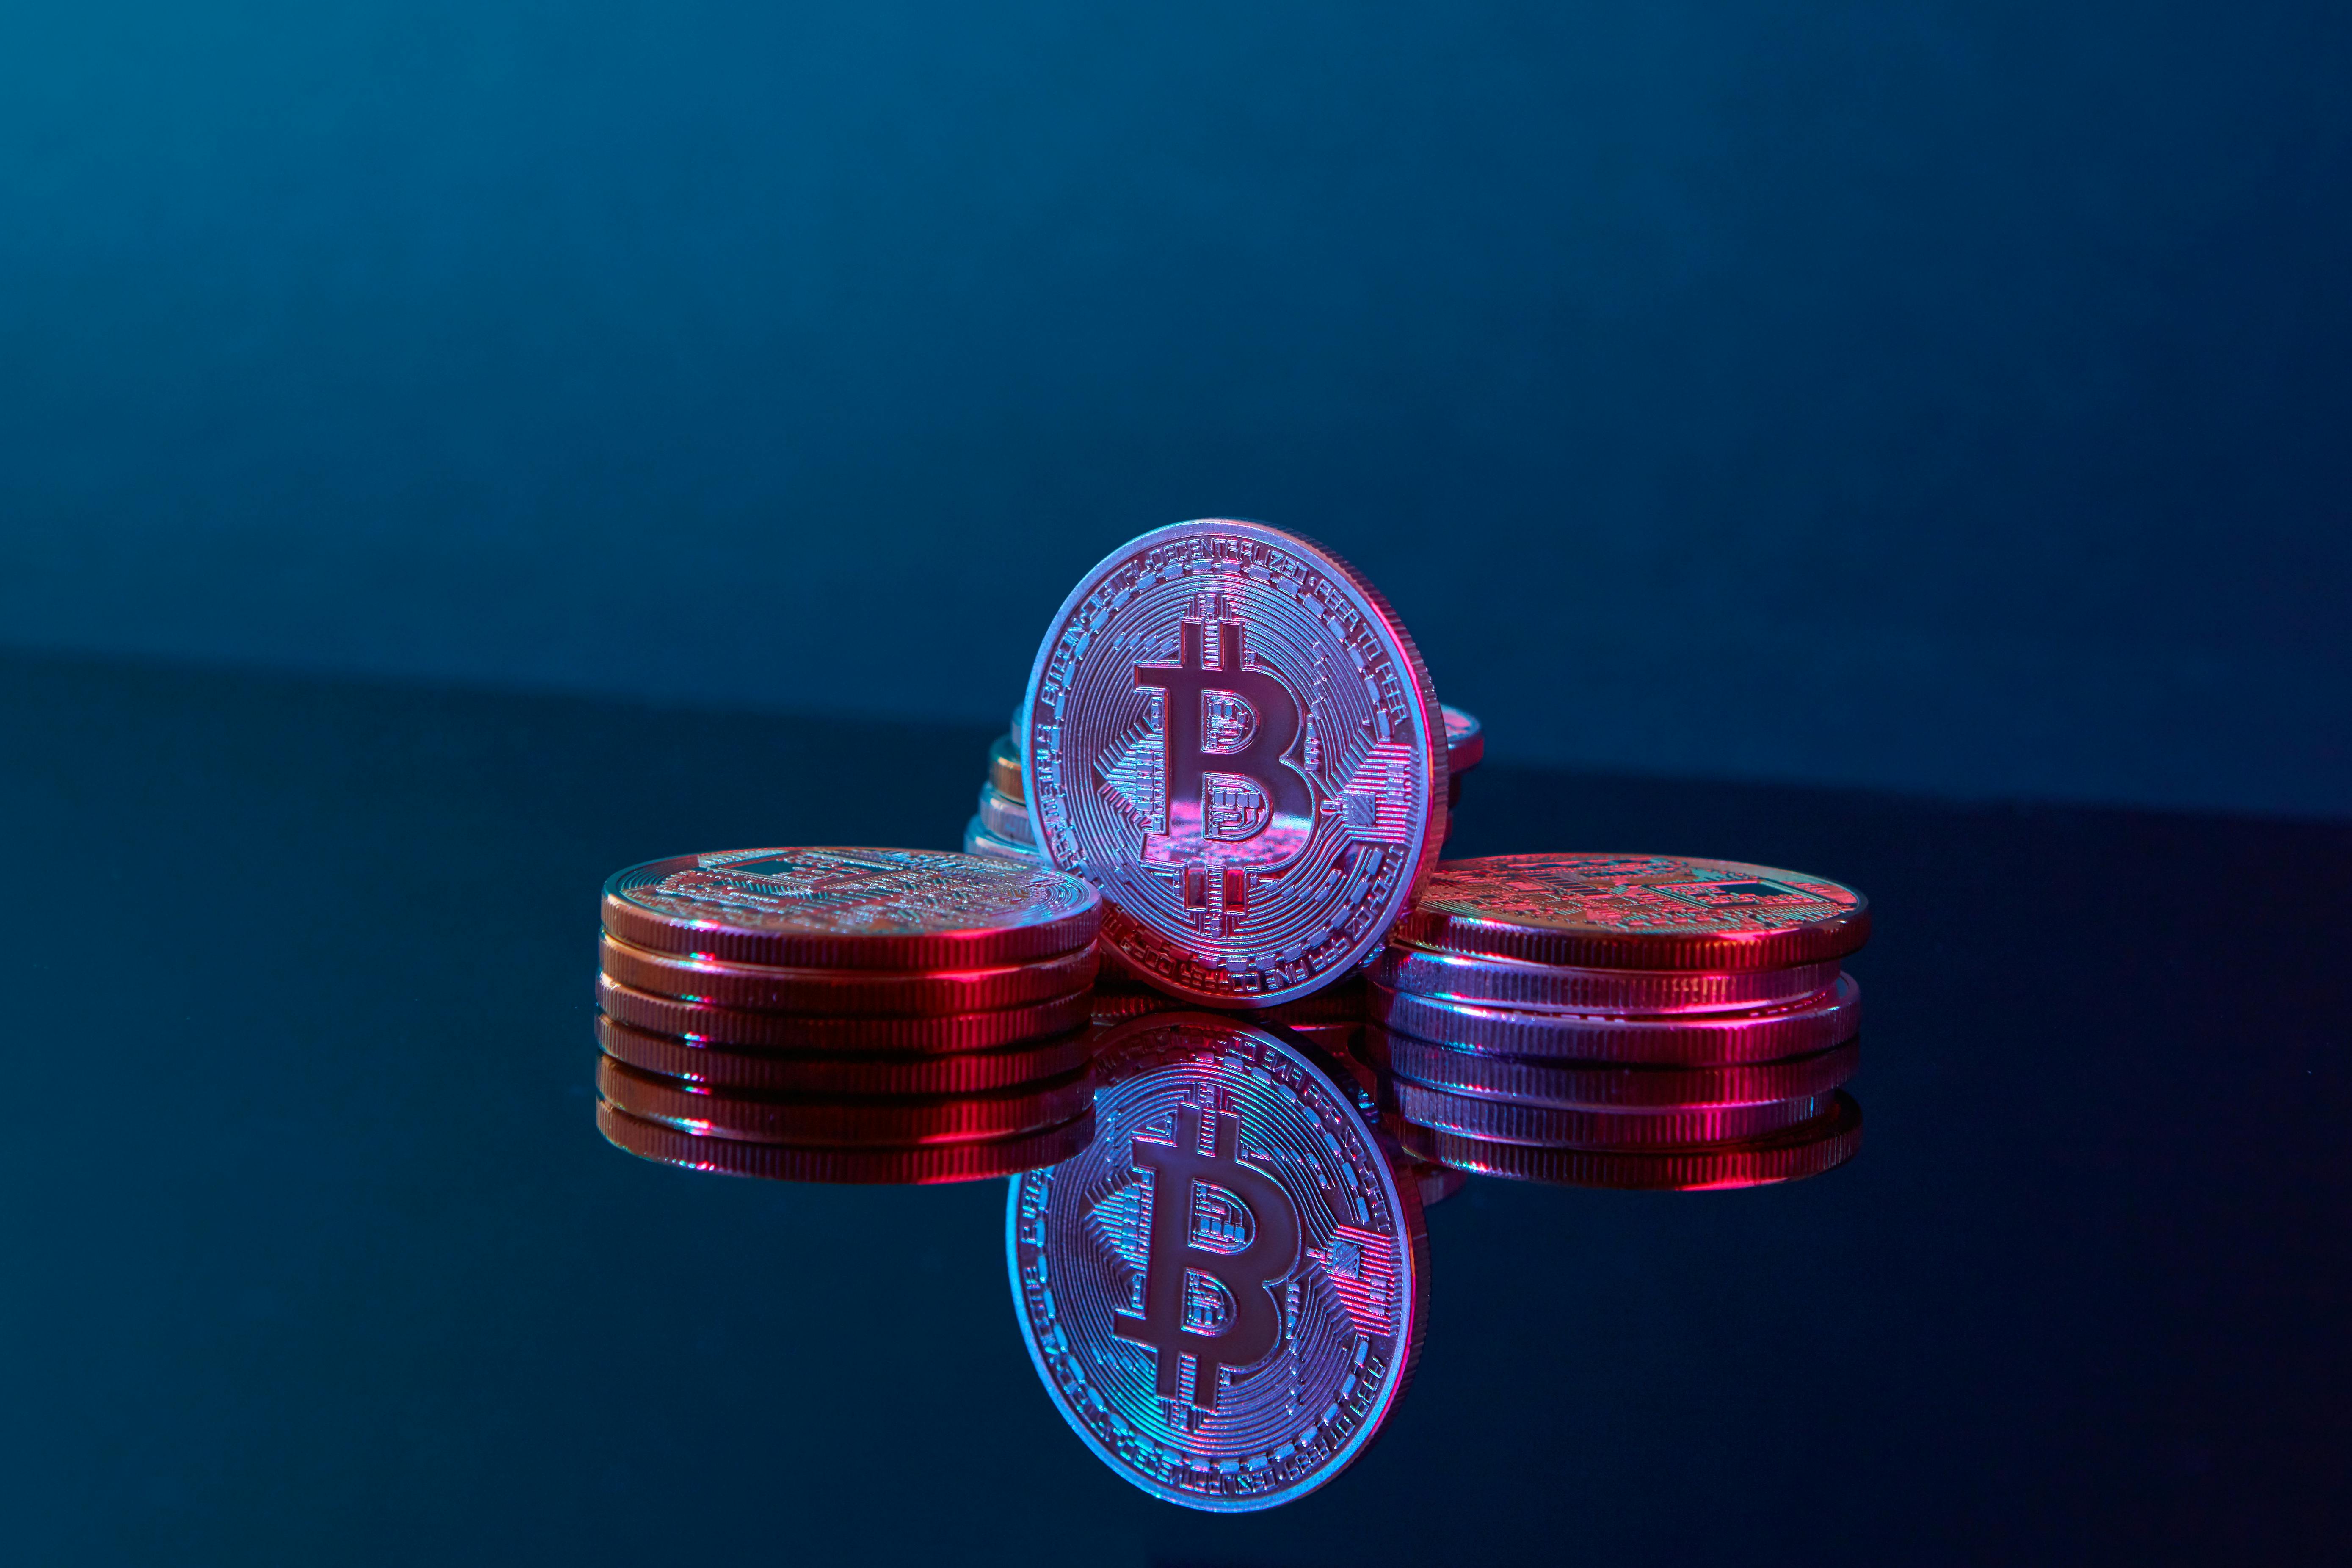 photo of bitcoins illuminated by a purple light